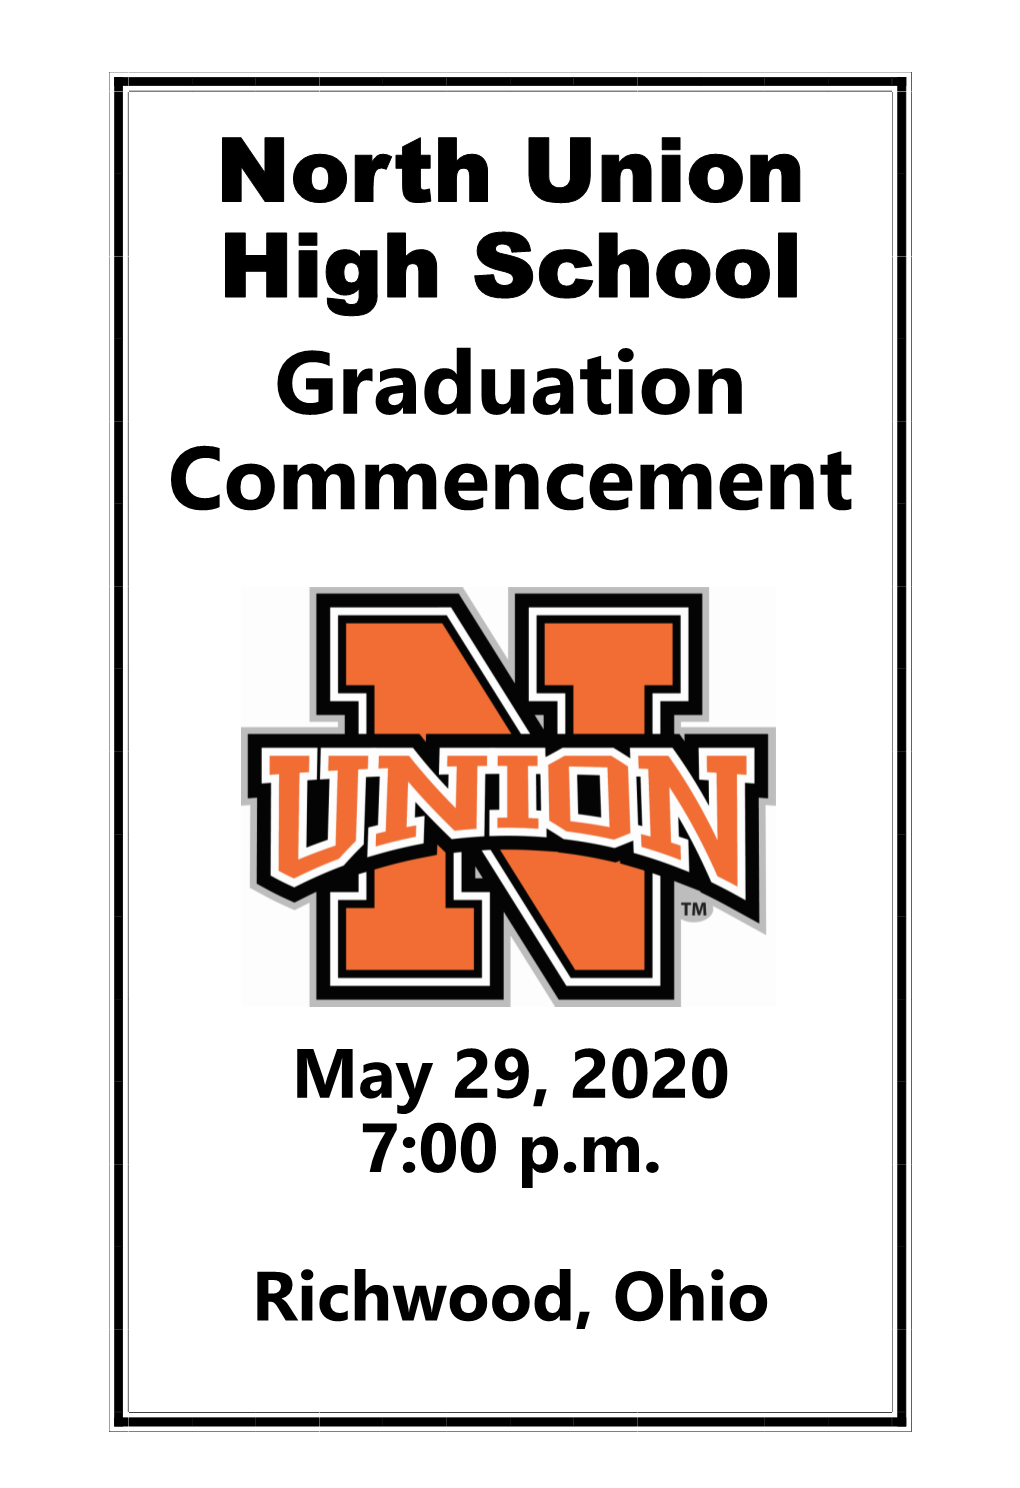 North Union High School Graduation Commencement